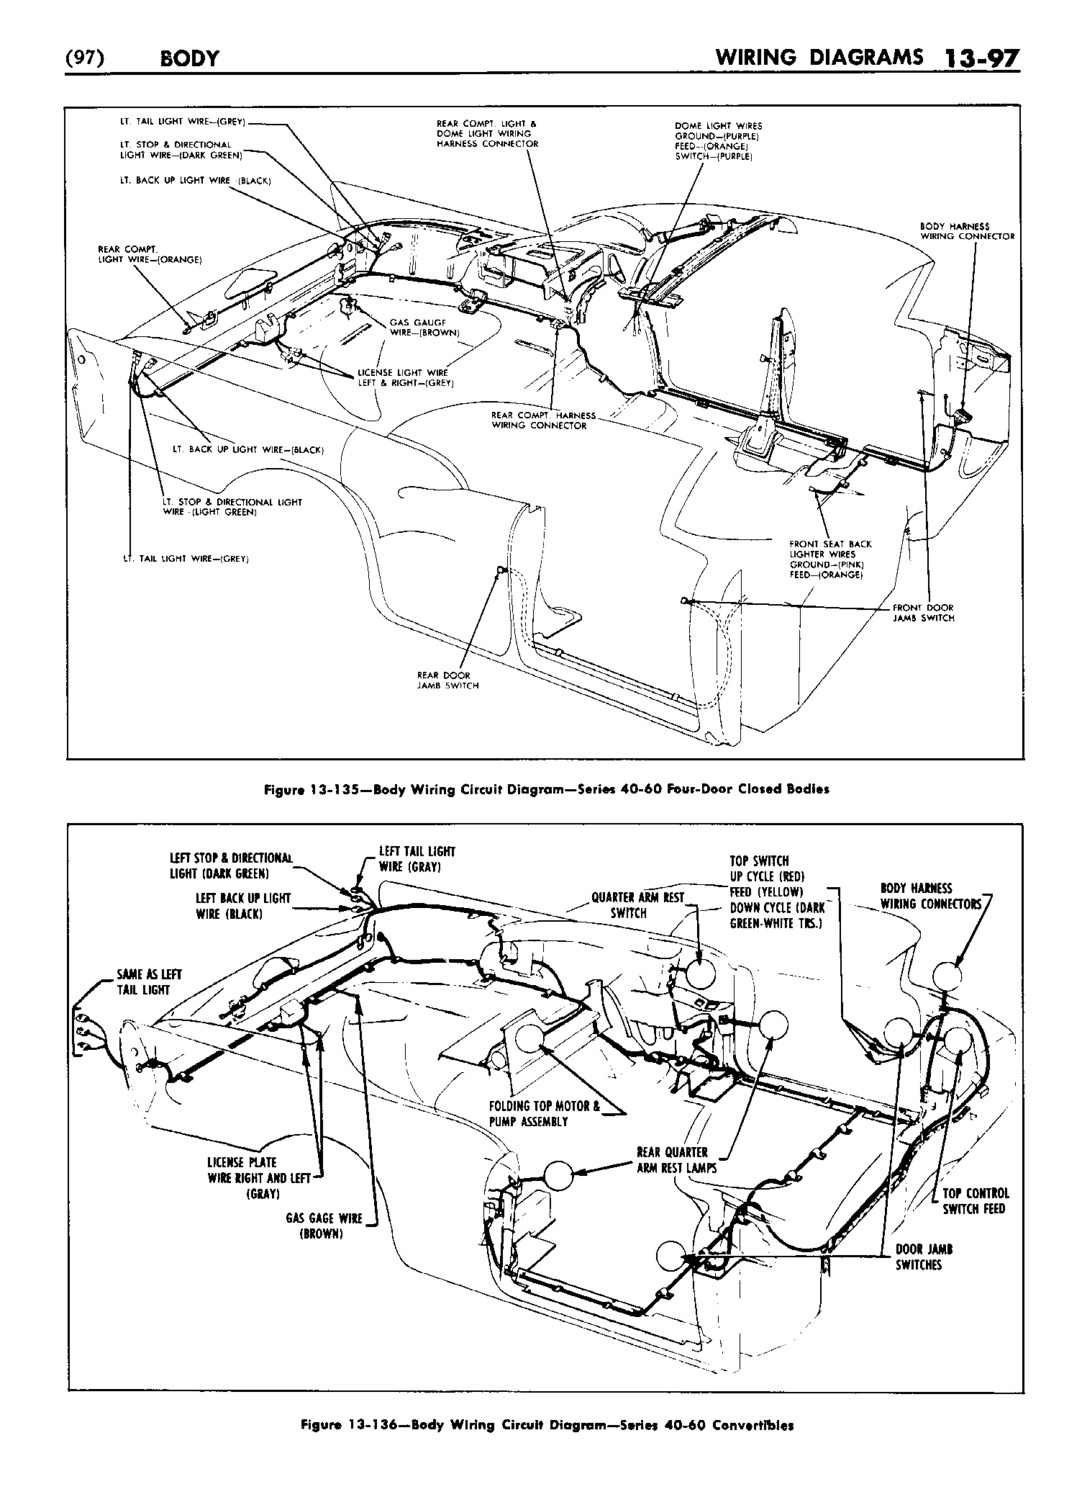 n_1958 Buick Body Service Manual-098-098.jpg